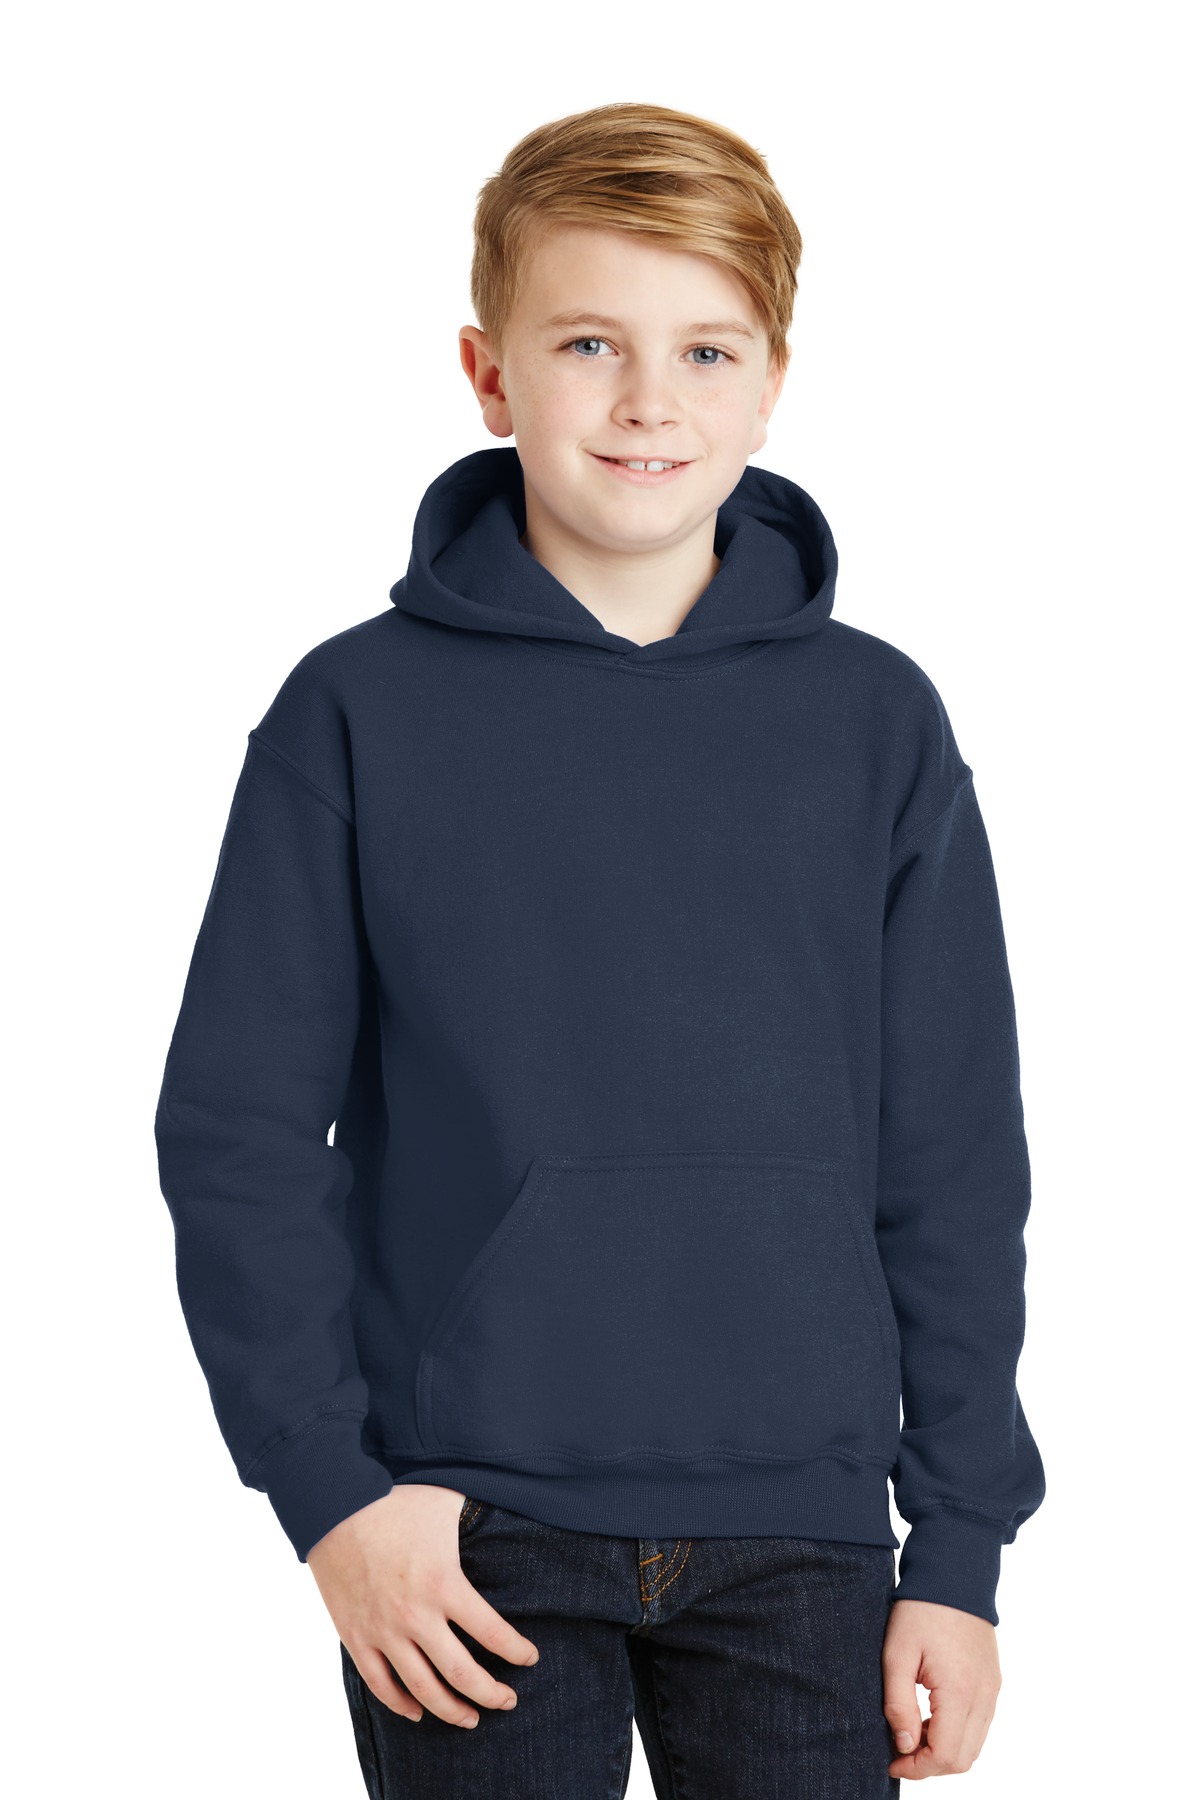 I- Youth Unisex  Heavy Blend Hooded Sweatshirt